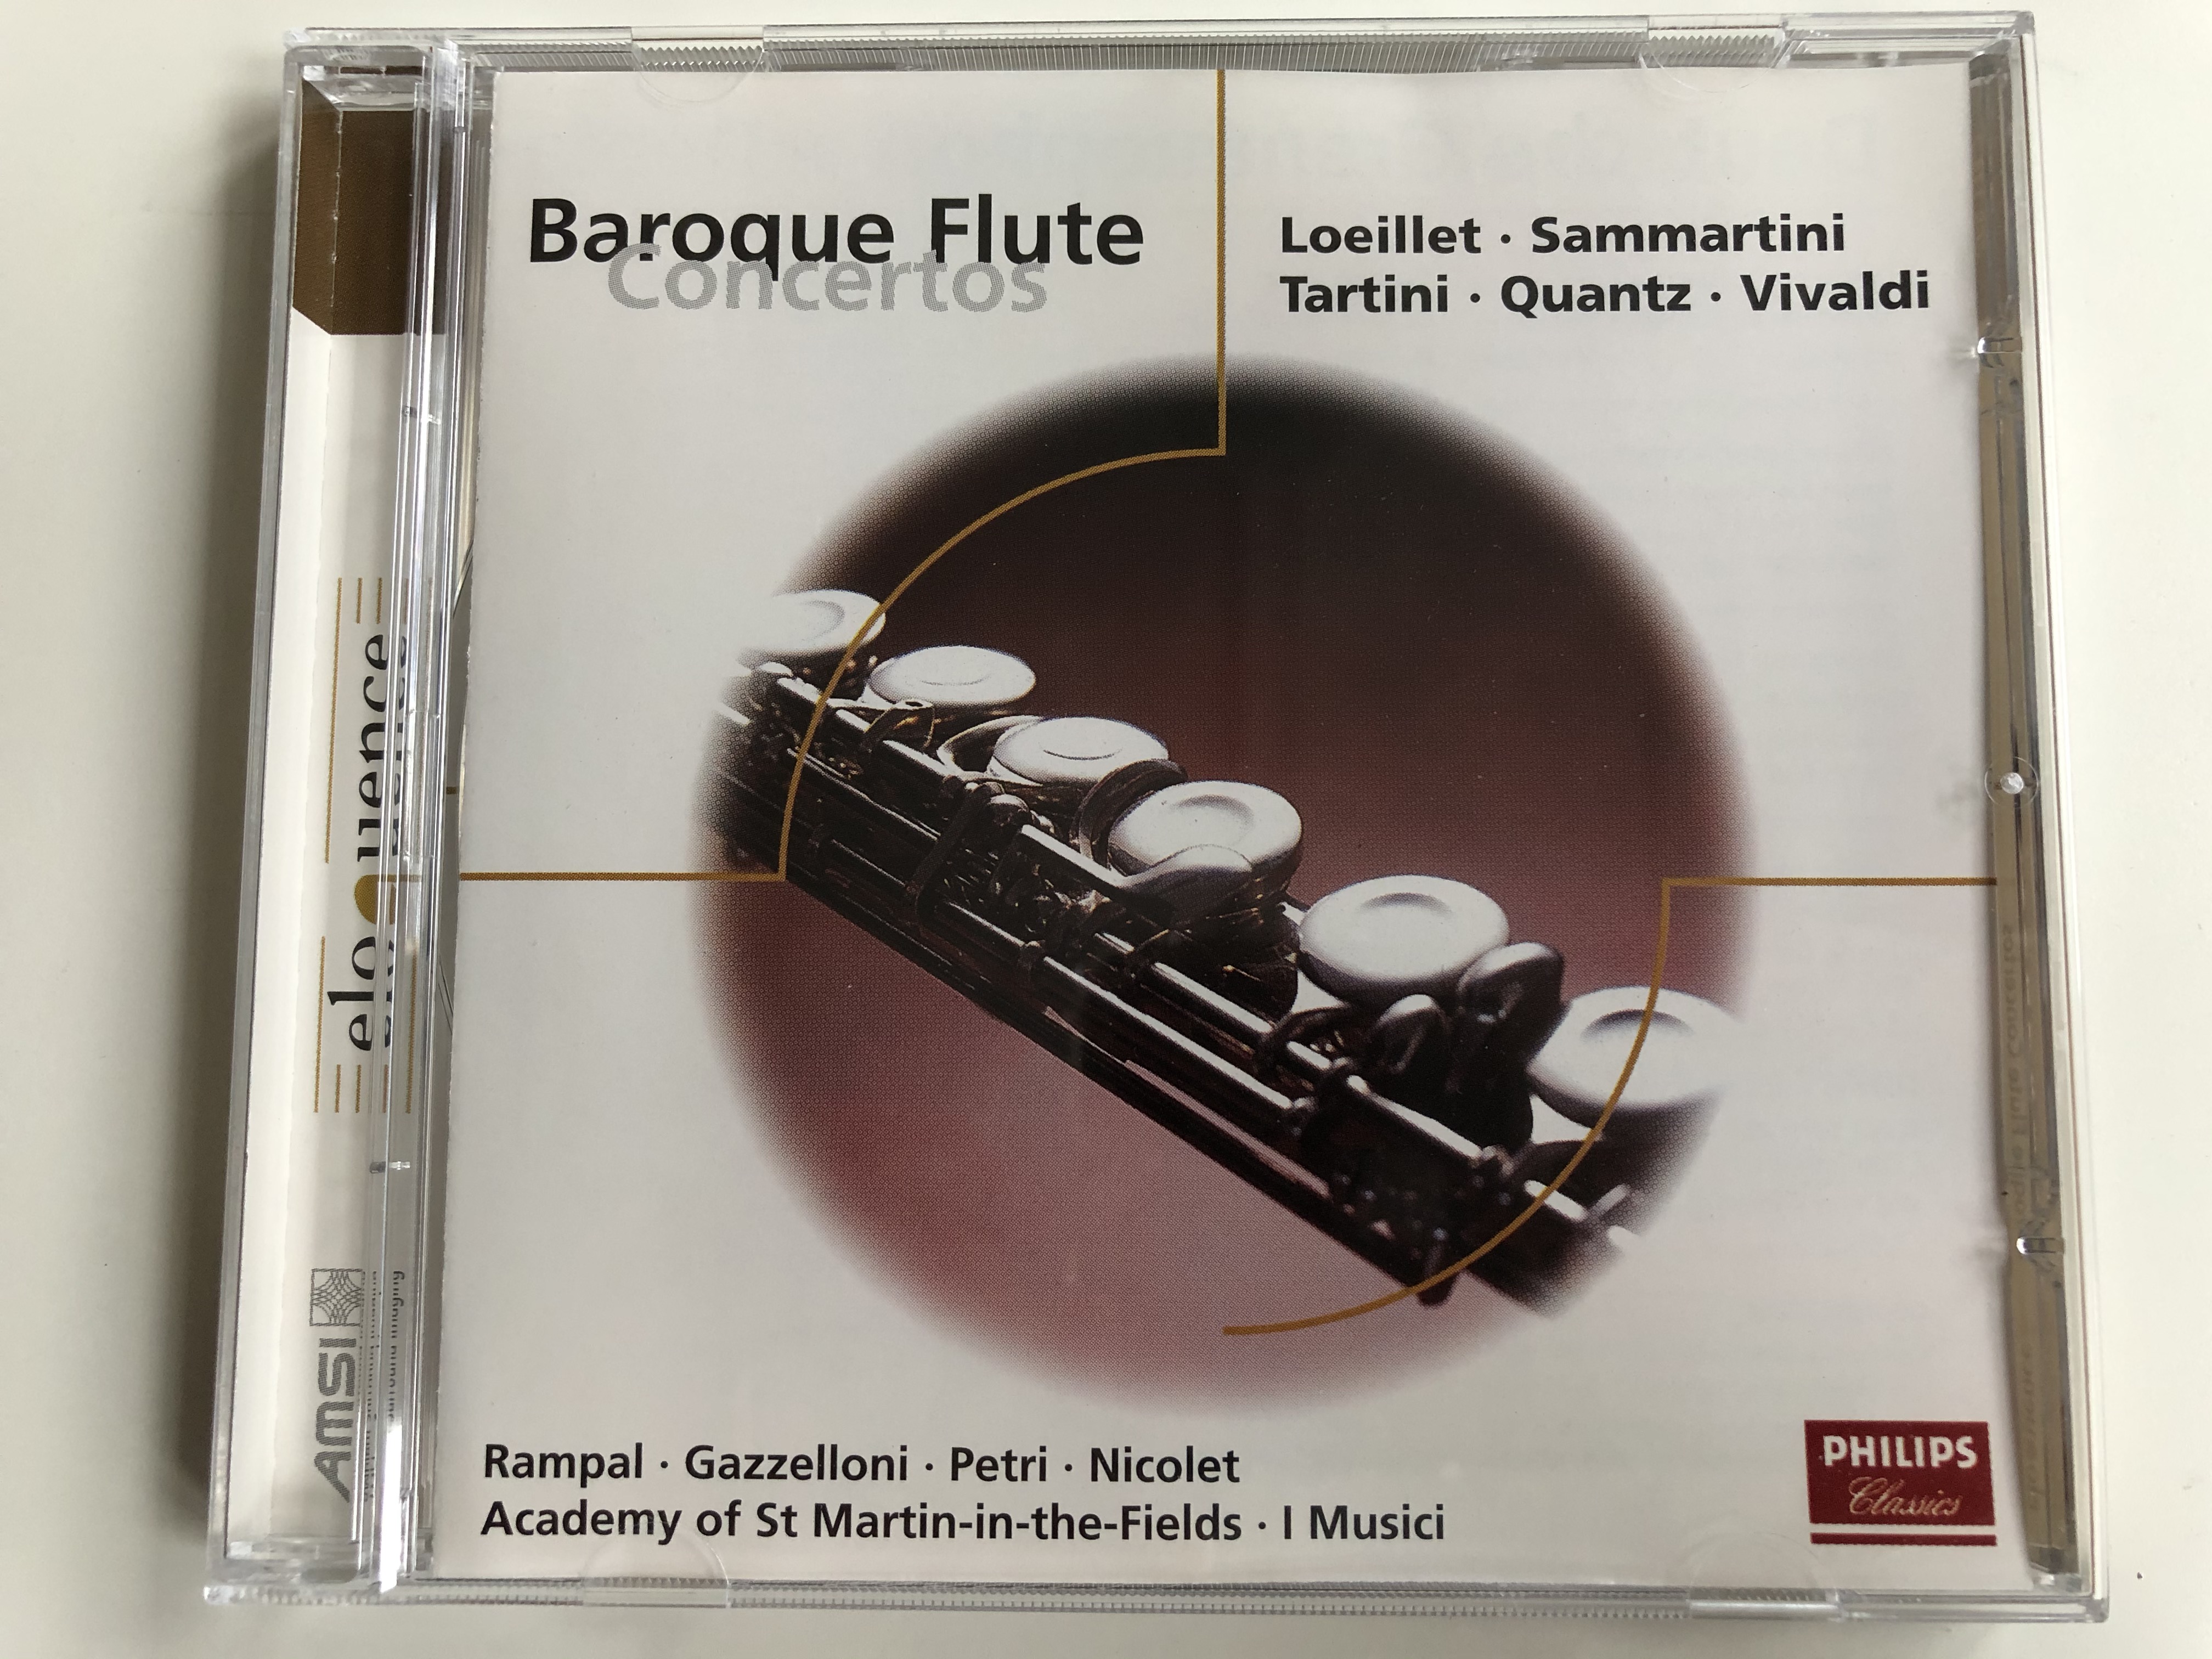 baroque-flute-concertos-loeillet-sammartini-tartini-quantz-vivaldi-rampal-gazzelloni-petri-nicolet-academy-of-st.-martin-in-the-fields-i-musici-universal-audio-cd-468-134-2-1-.jpg